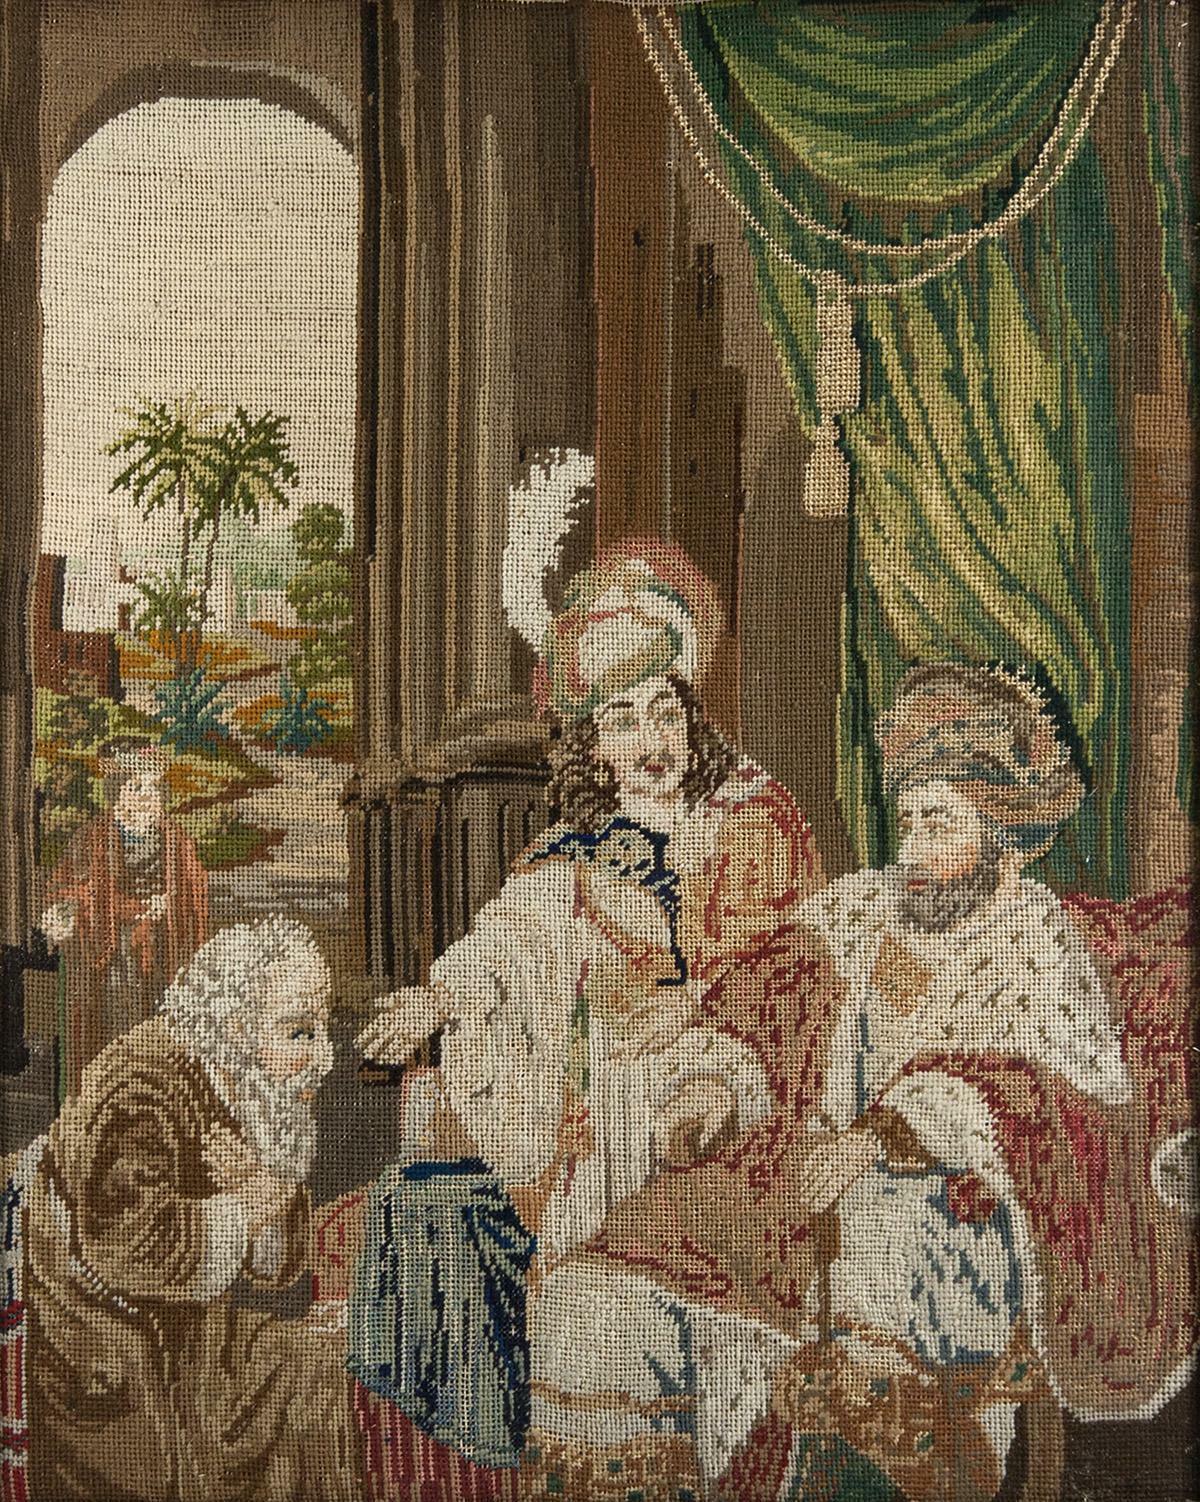 Antique Victorian Era Fine Needlepoint Tapestry in Elegant Frame, King & Throne